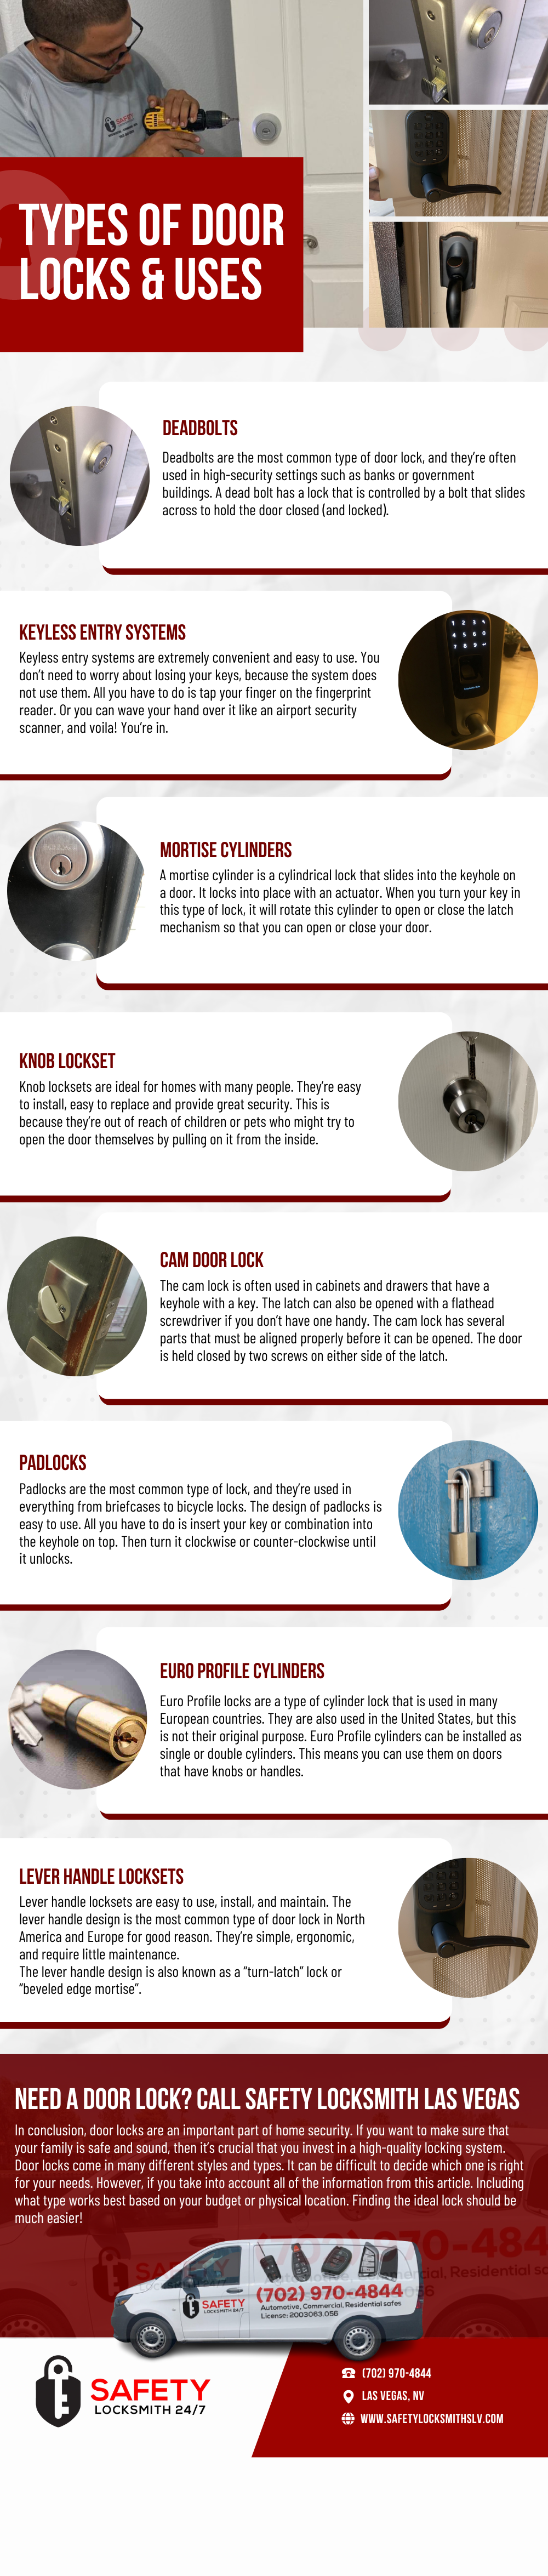 Types of Door Locks & Uses